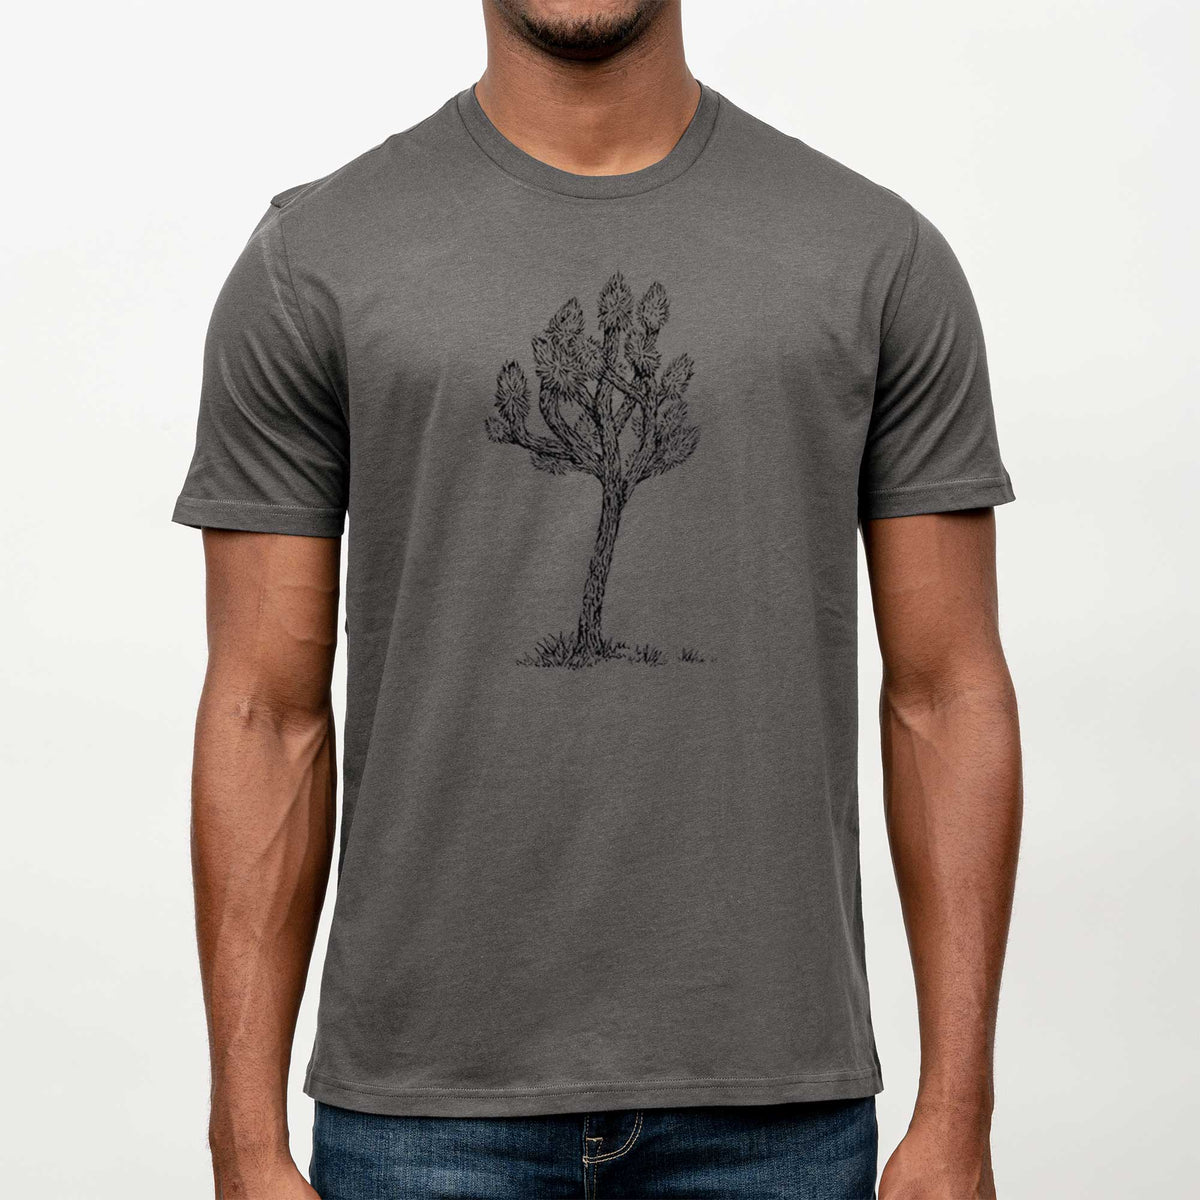 Yucca brevifolia - Joshua Tree -  Mineral Wash 100% Organic Cotton Short Sleeve